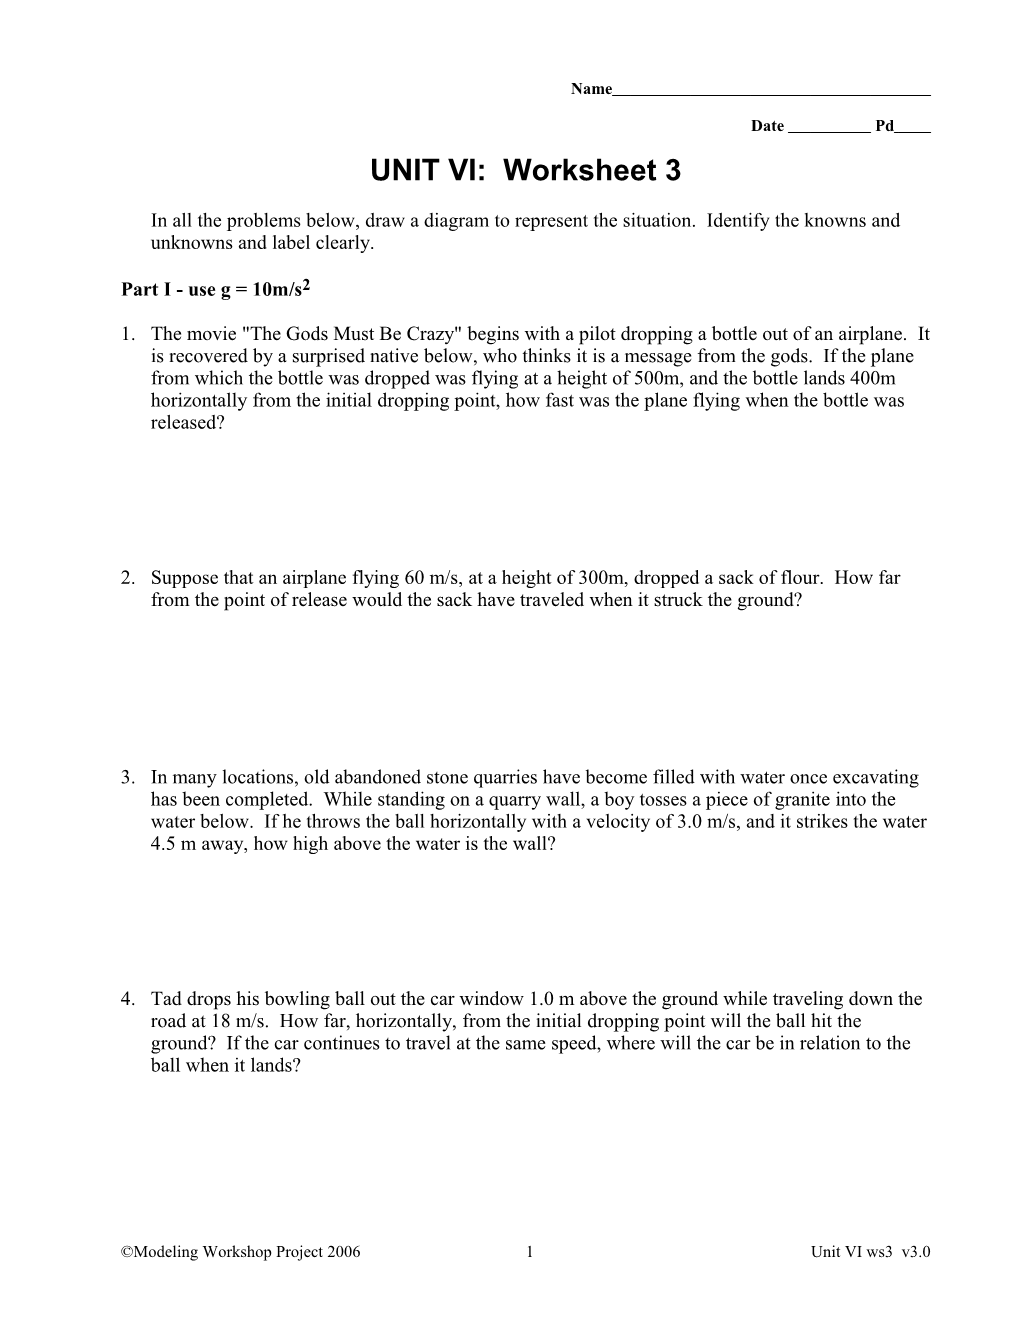 UNIT VI: Worksheet 3